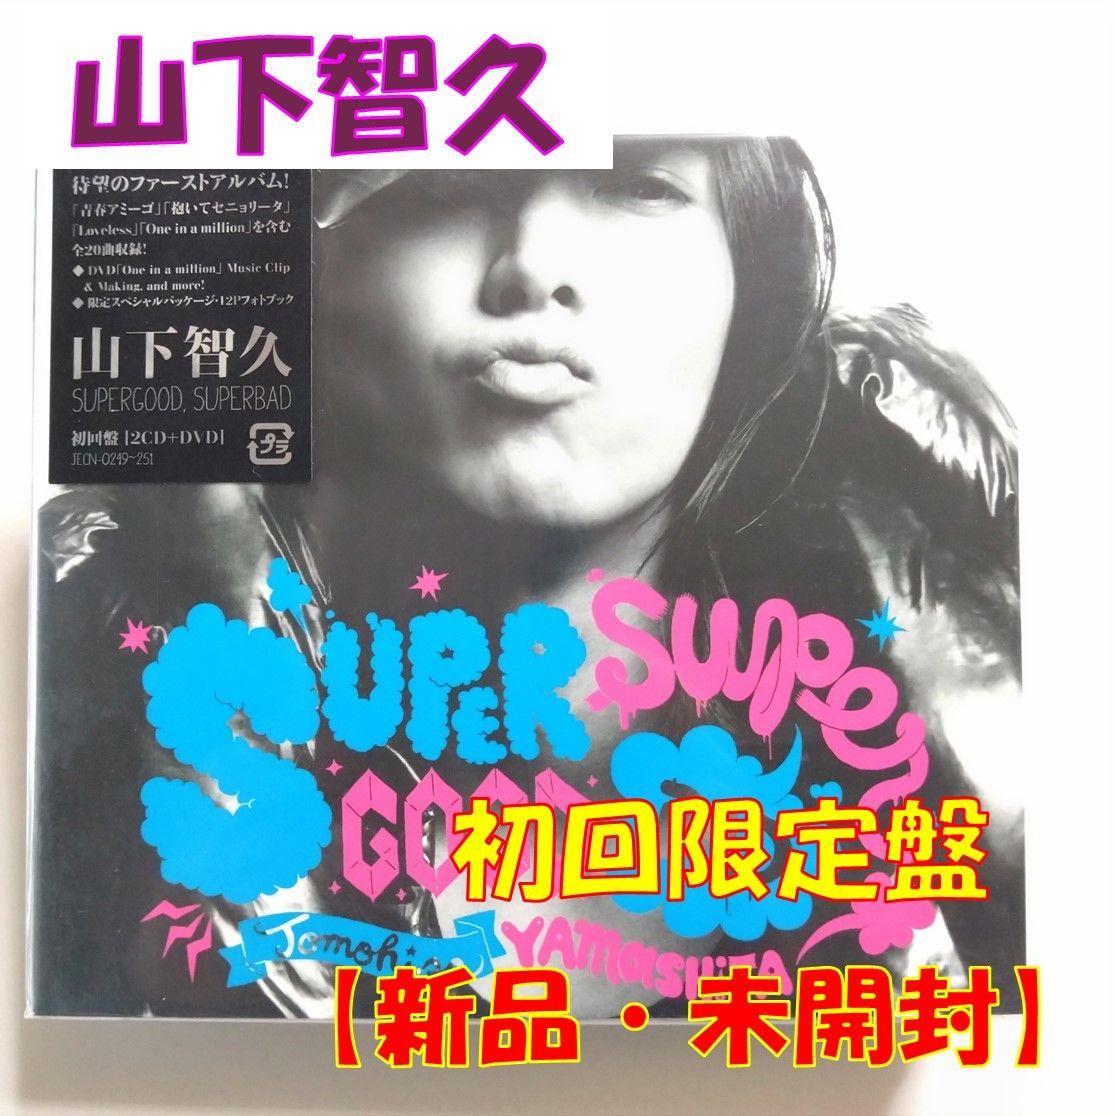 CD】山下智久【SUPERGOOD,SUPERBAD】【初回盤】【新品 未開封】【匿名